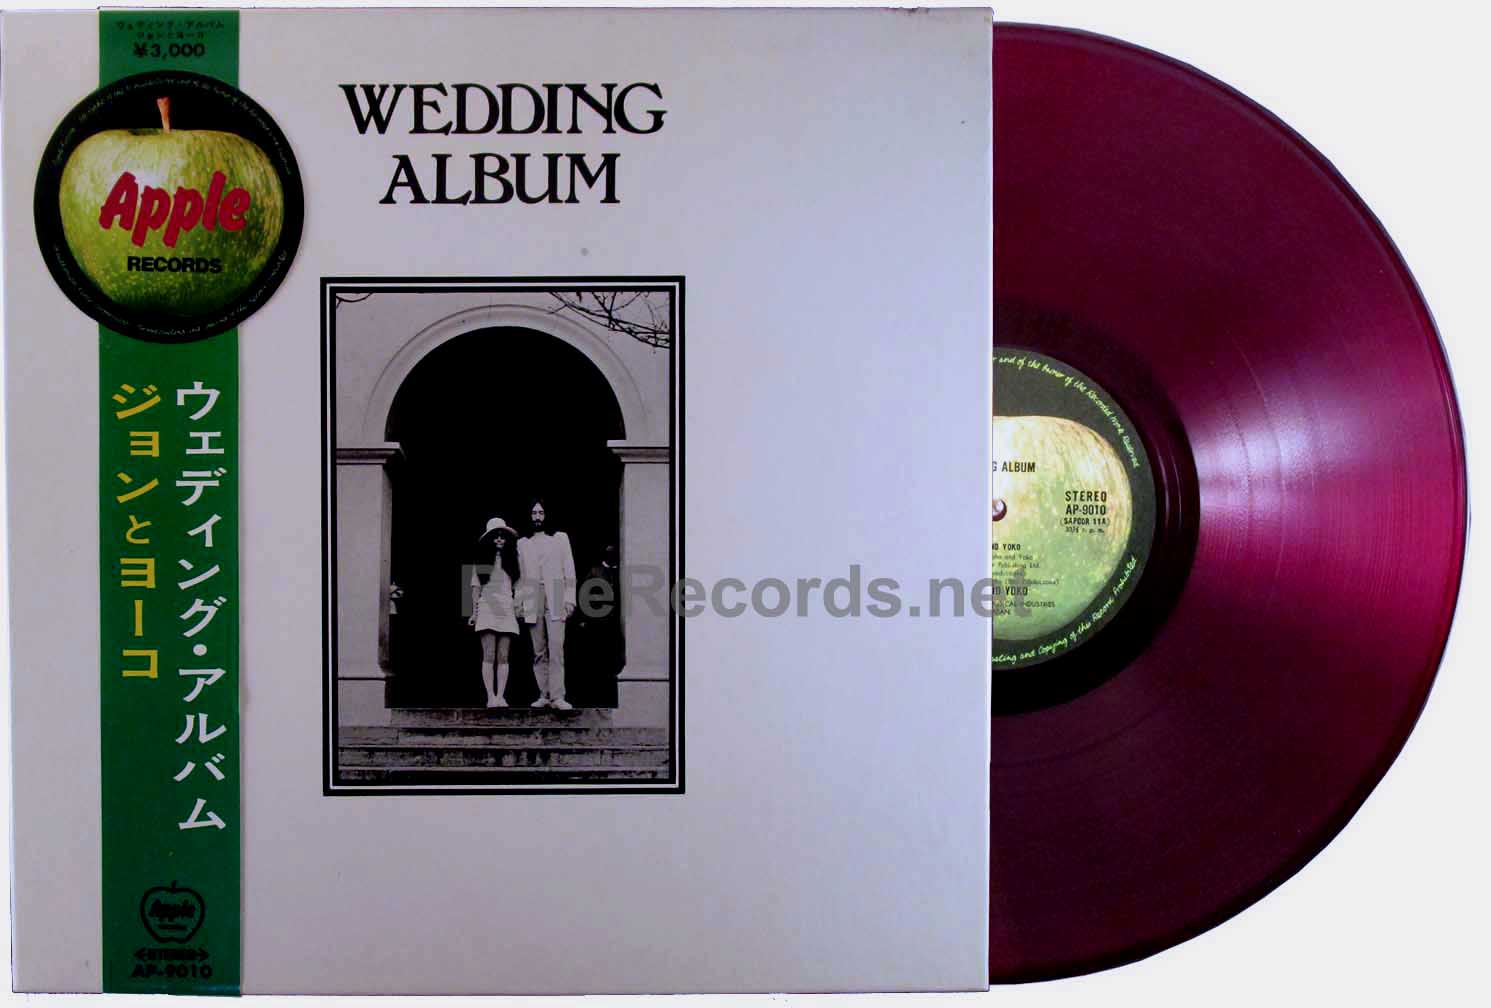 John Lennon/Yoko Ono - Wedding Album red vinyl Japan box set with obi